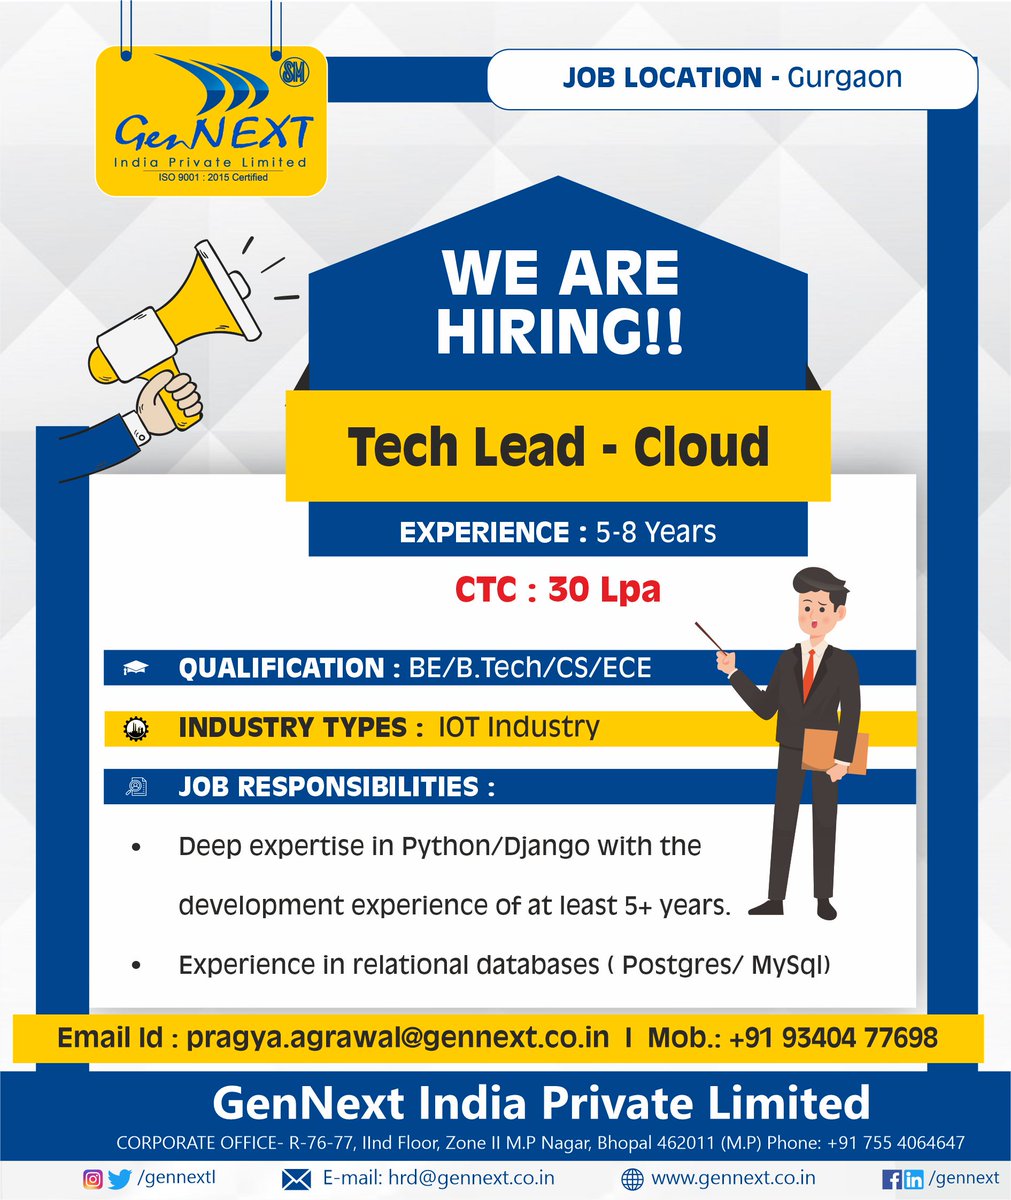 #urgent_hirings
#techleadcloud #gurgaonjob #be #btech #cs #ece #30lpa  #india #tech #cloud #mysql #python #gurgaon  #experience
#hiringalert #hiringnow #employment #job #work #jobalerts #vacancyjob #gennext #gennexthiring #gennextjob #gennextindia